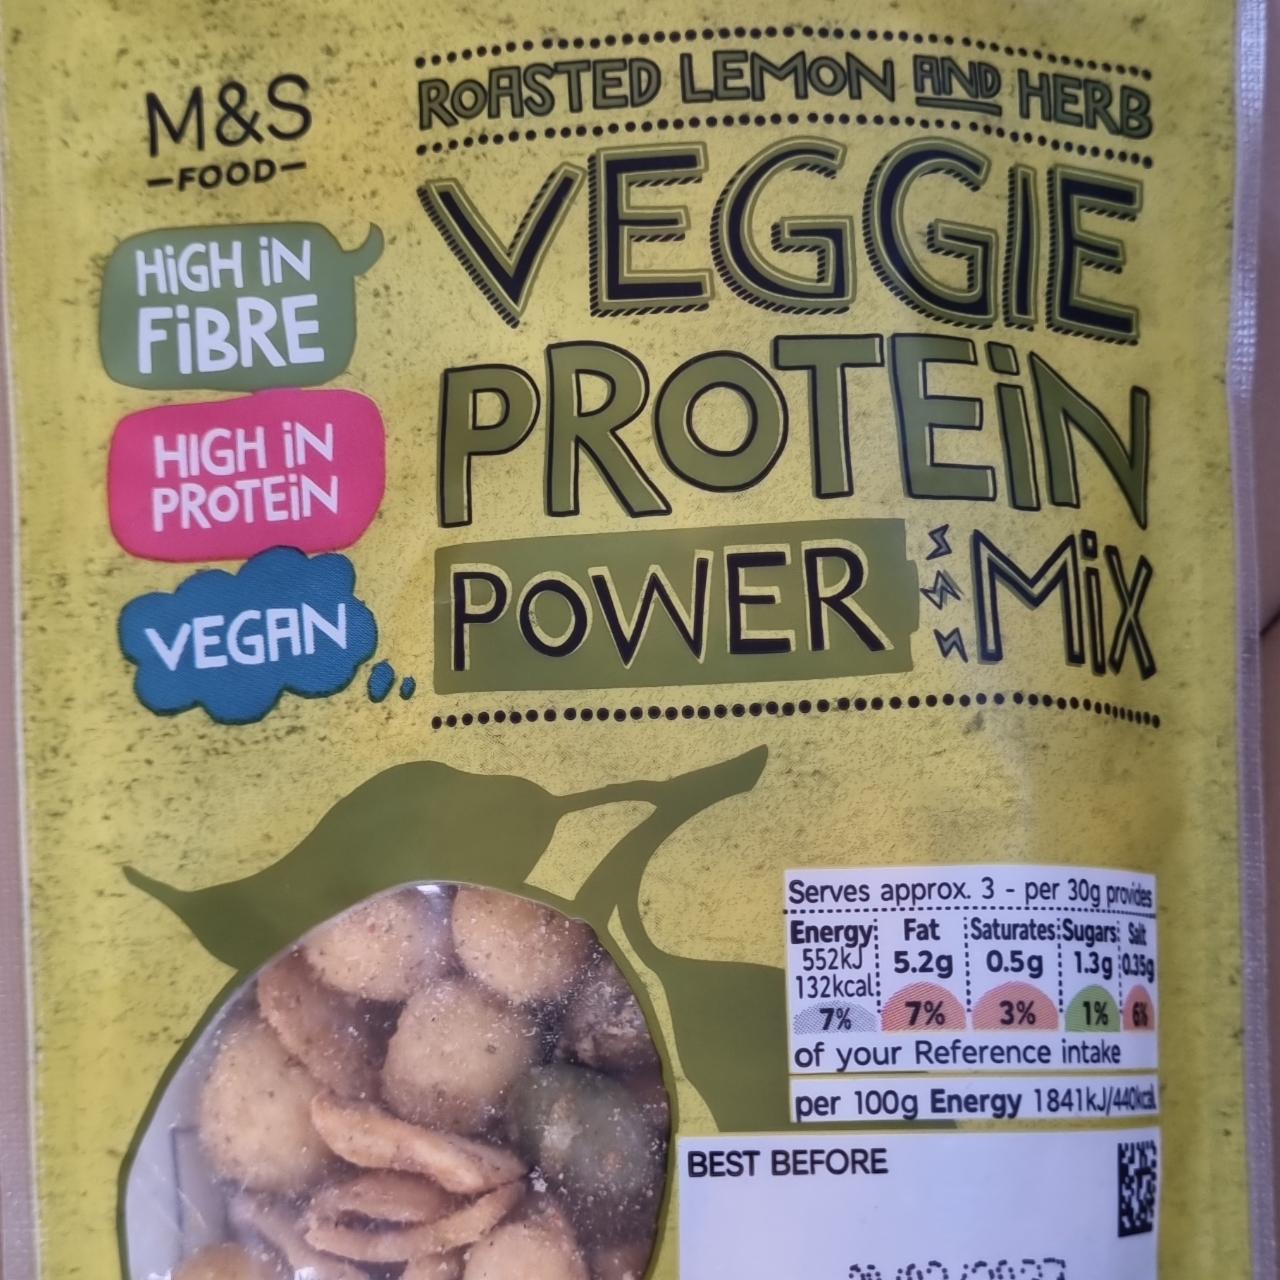 Fotografie - Veggie protein power mix M&S Food